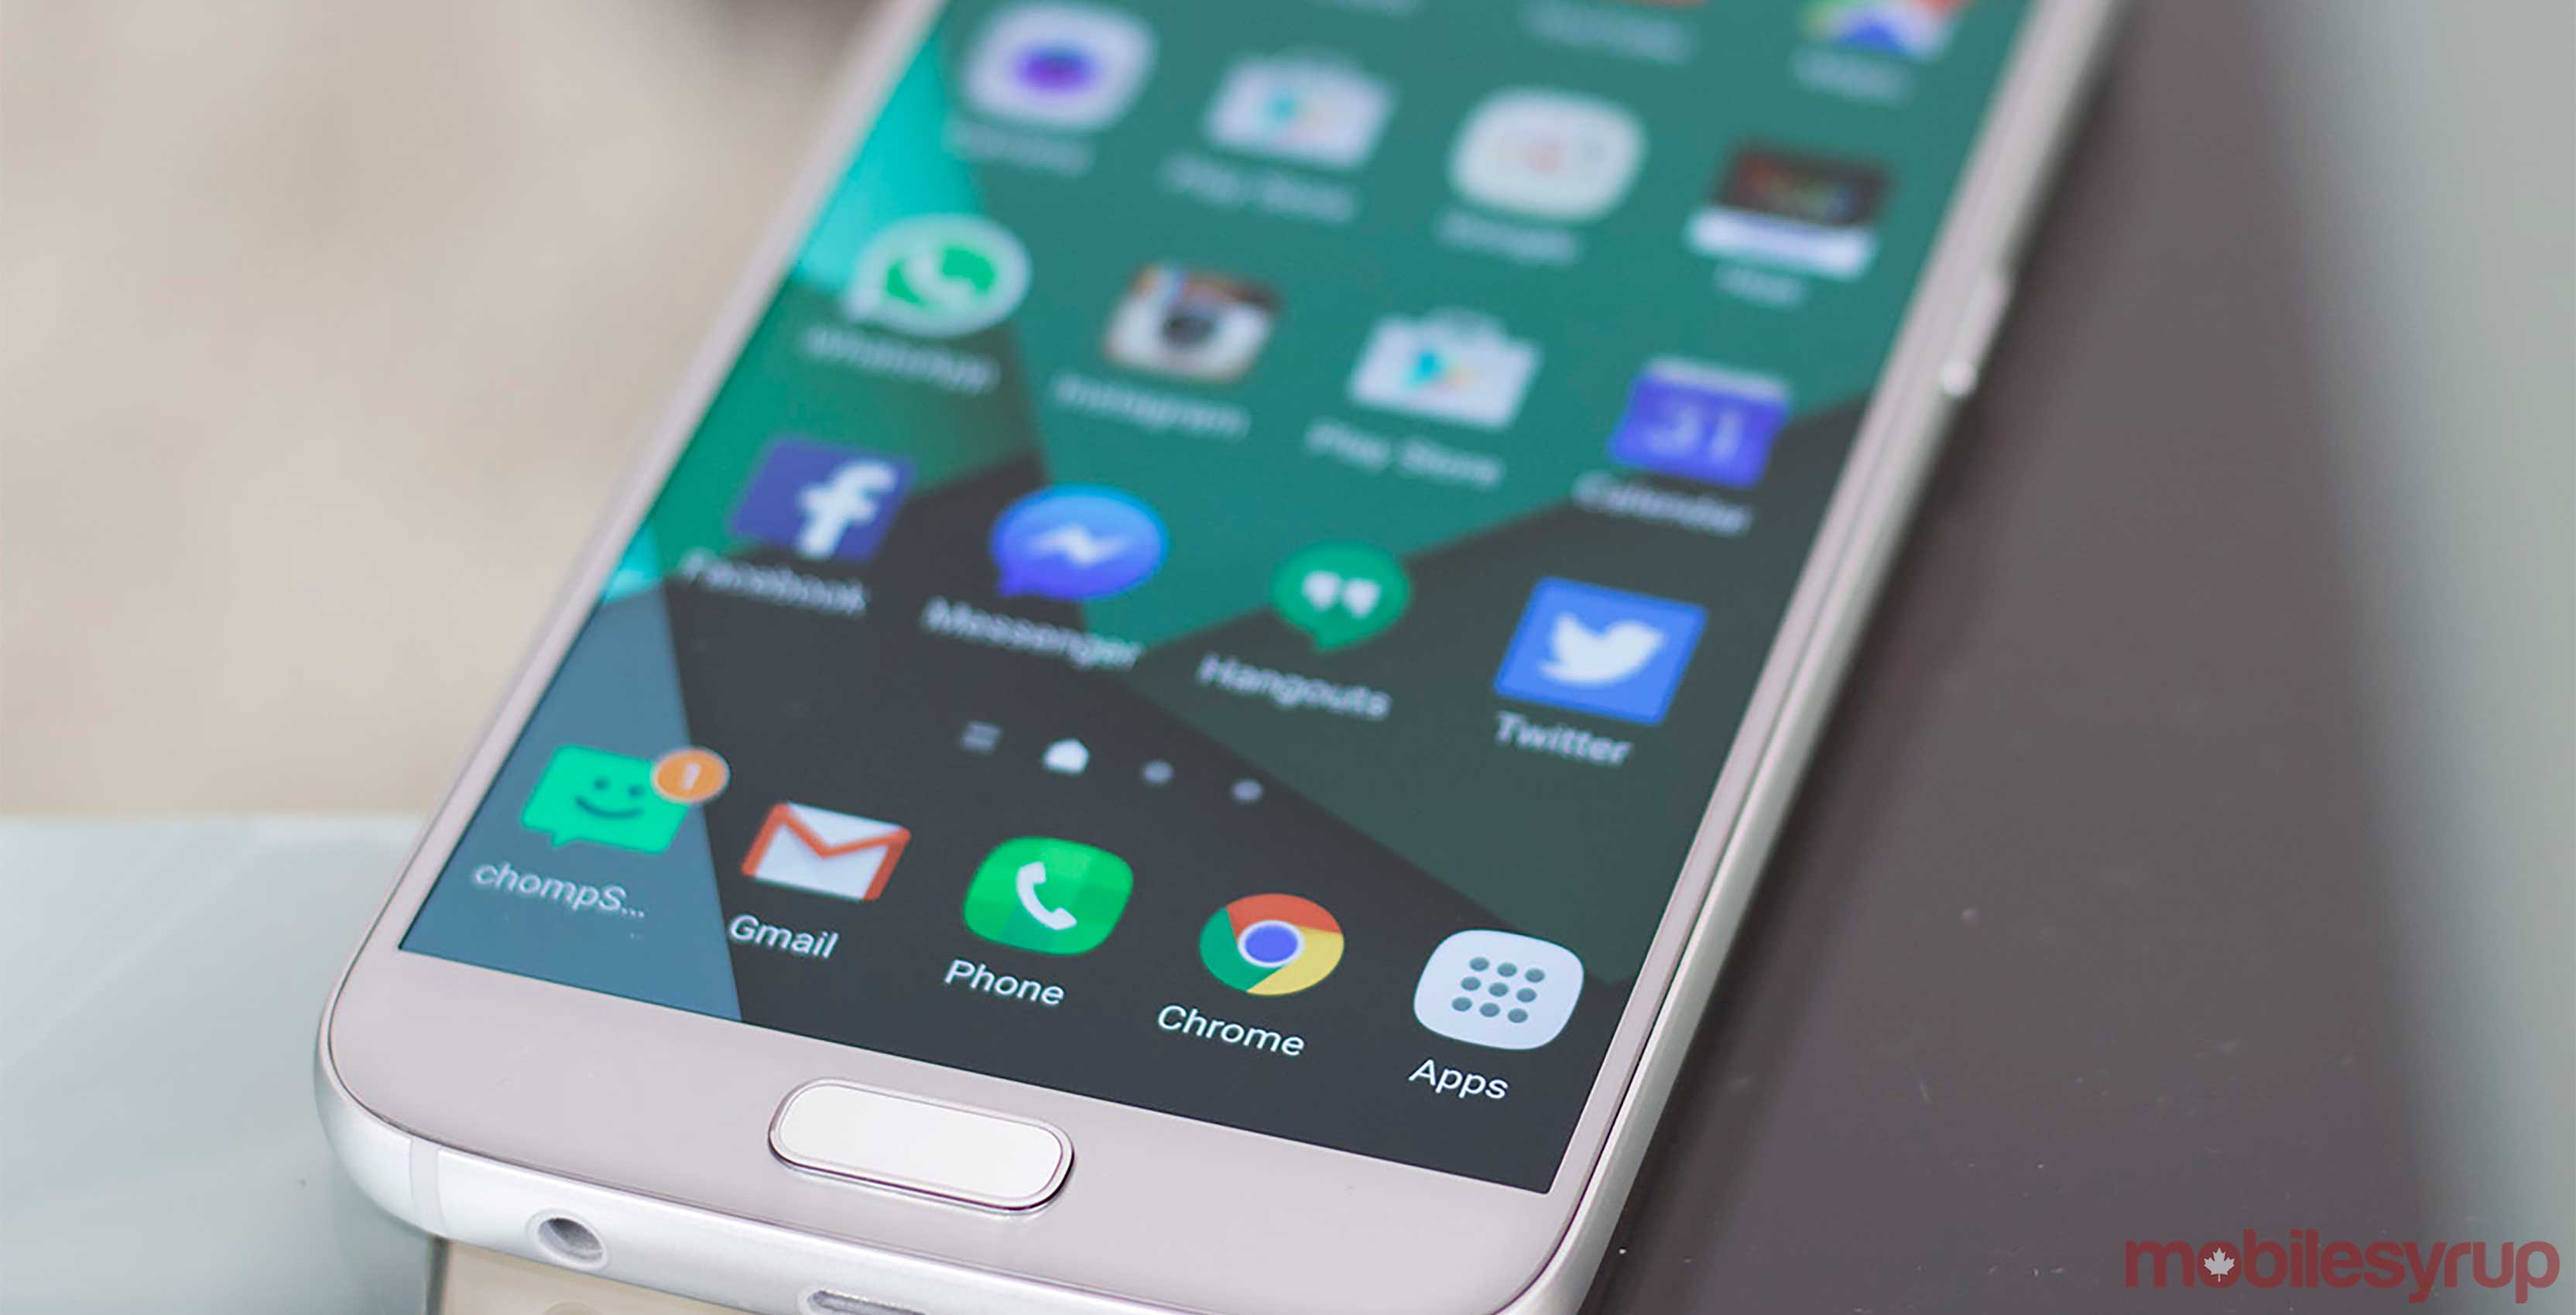 Samsung Galaxy S7 smartphone - Galaxy S8 Bixby